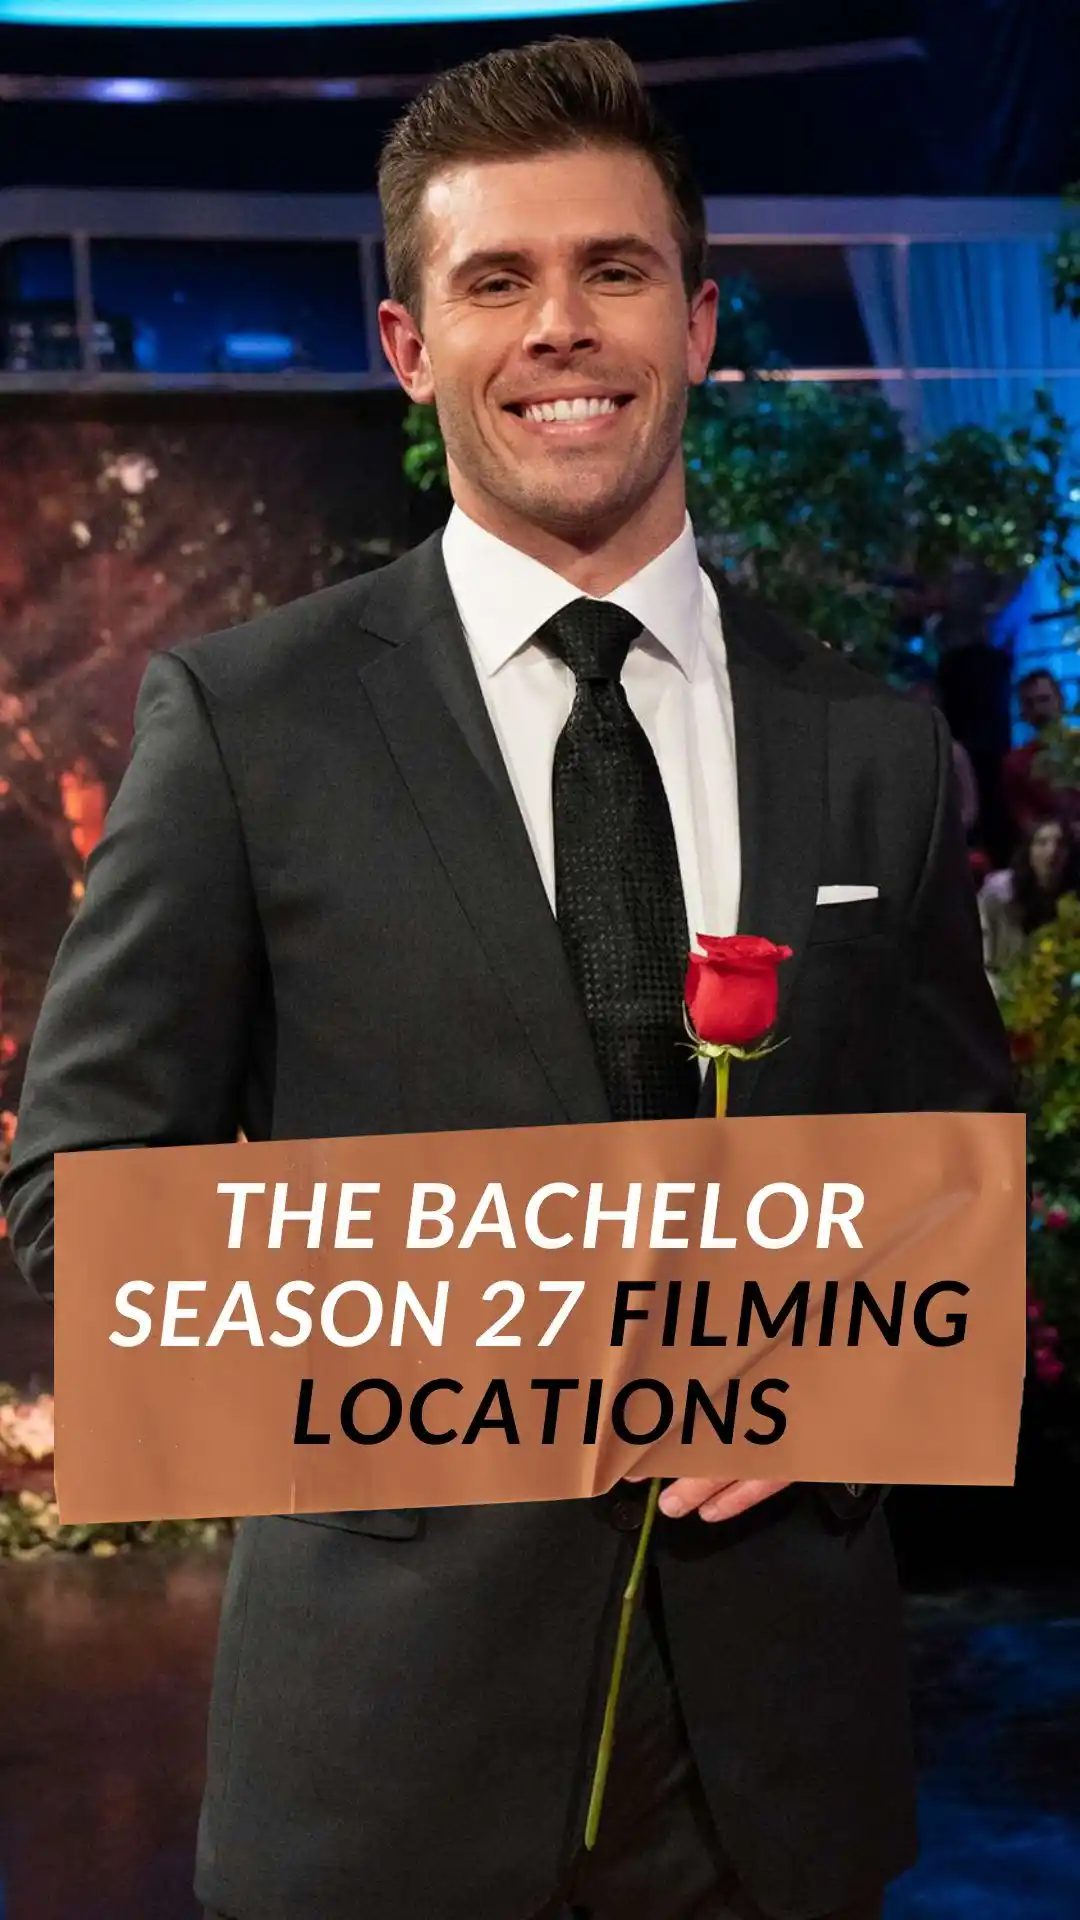 The Bachelor Season 27 Filming Locations